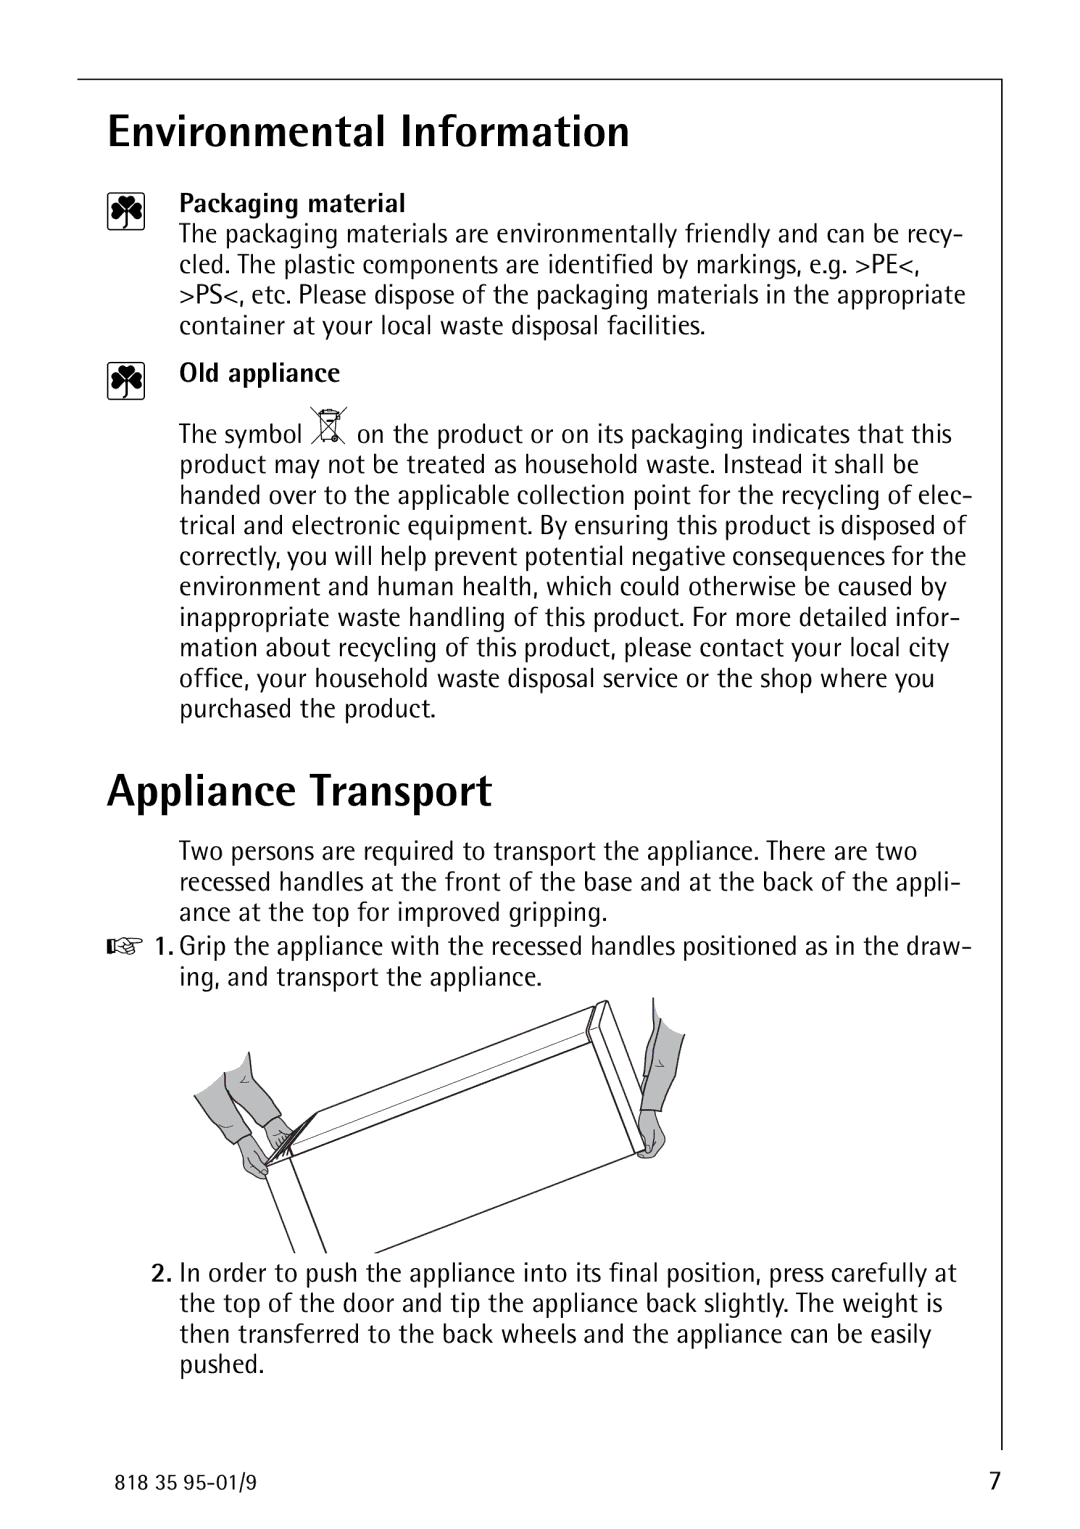 AEG 75248 GA1 manual Environmental Information, Appliance Transport, Packaging material, Old appliance 